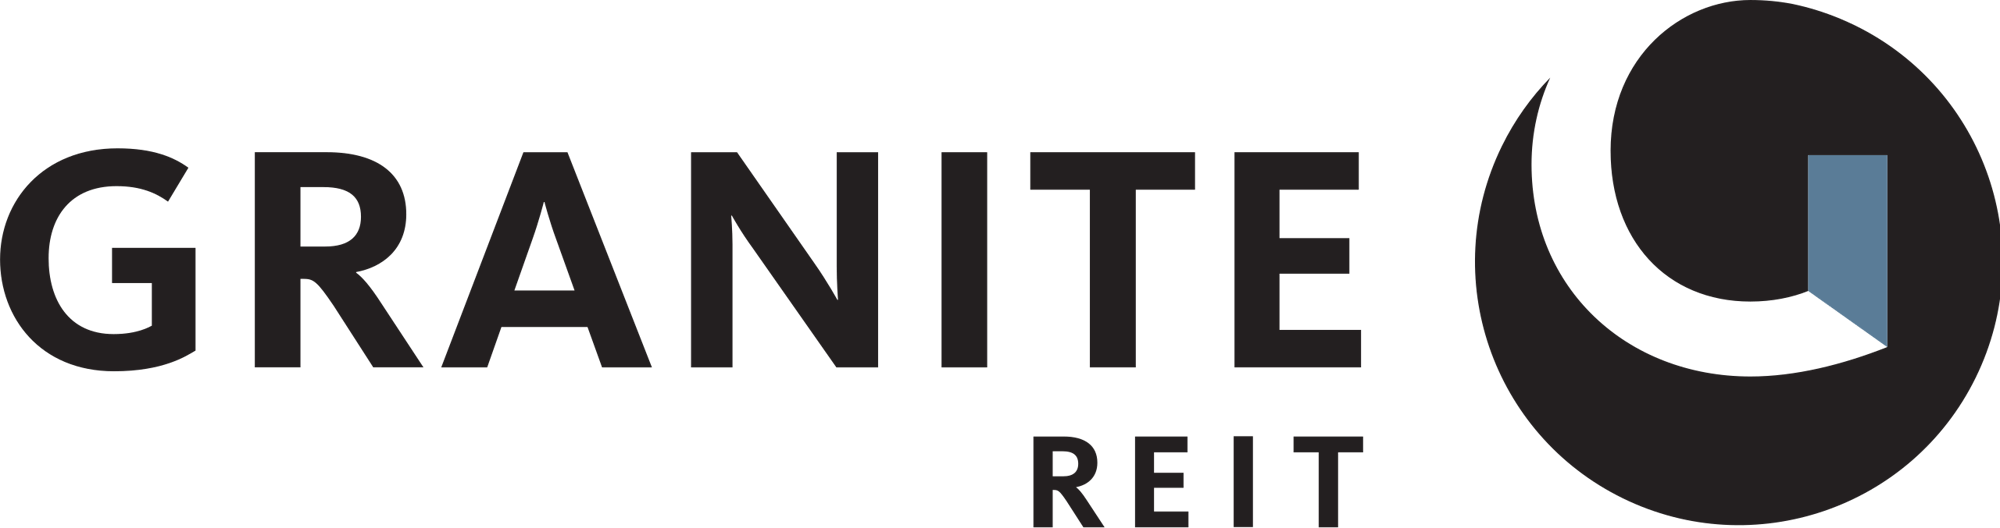 Granite_REIT_logo